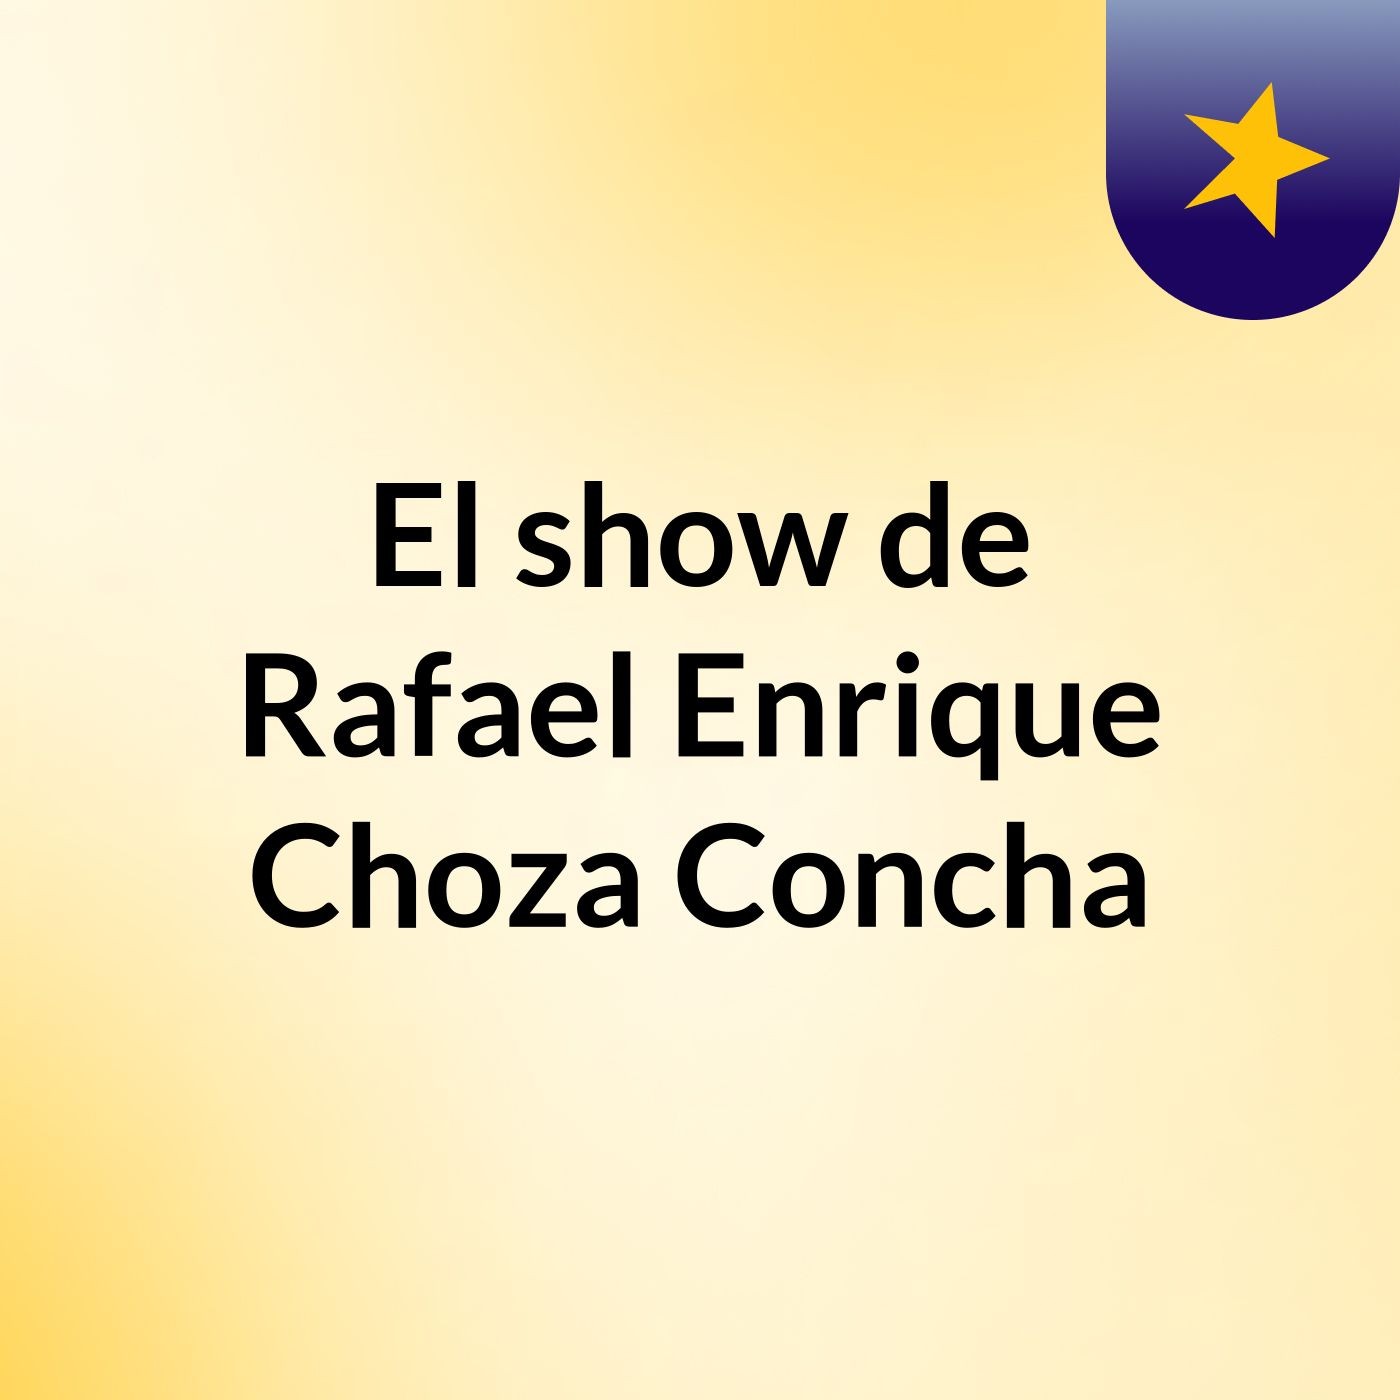 El show de Rafael Enrique Choza Concha